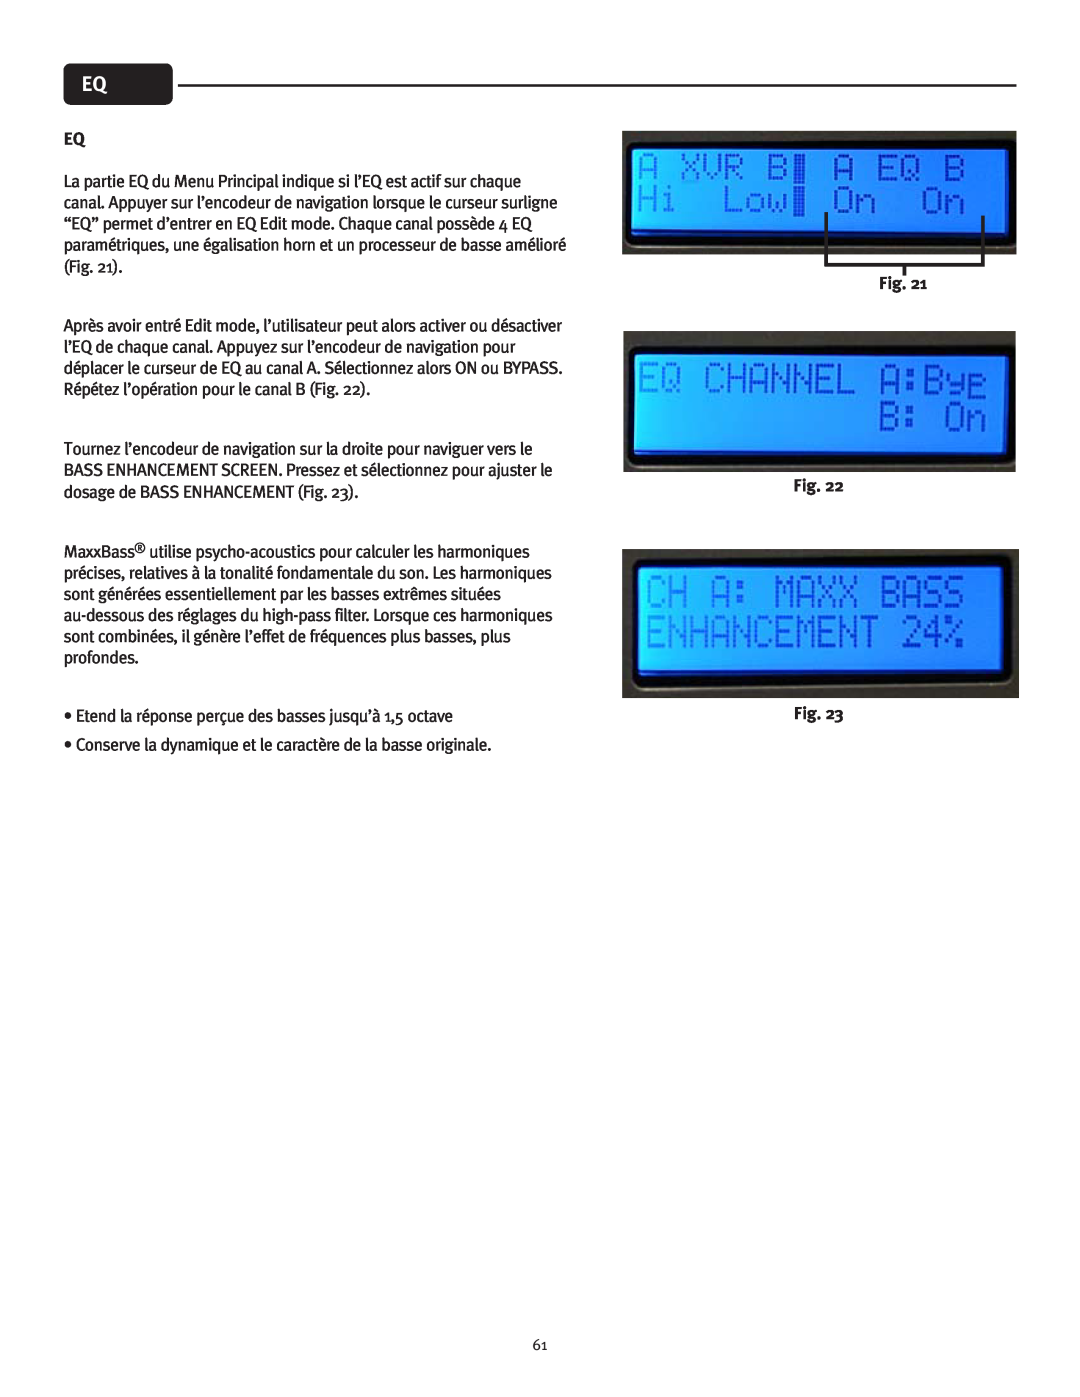 Peavey IPR 6000, IPR 3000, IPR 4500, IPR 1600 manual Etend la réponse perçue des basses jusqu’à 1,5 octave 